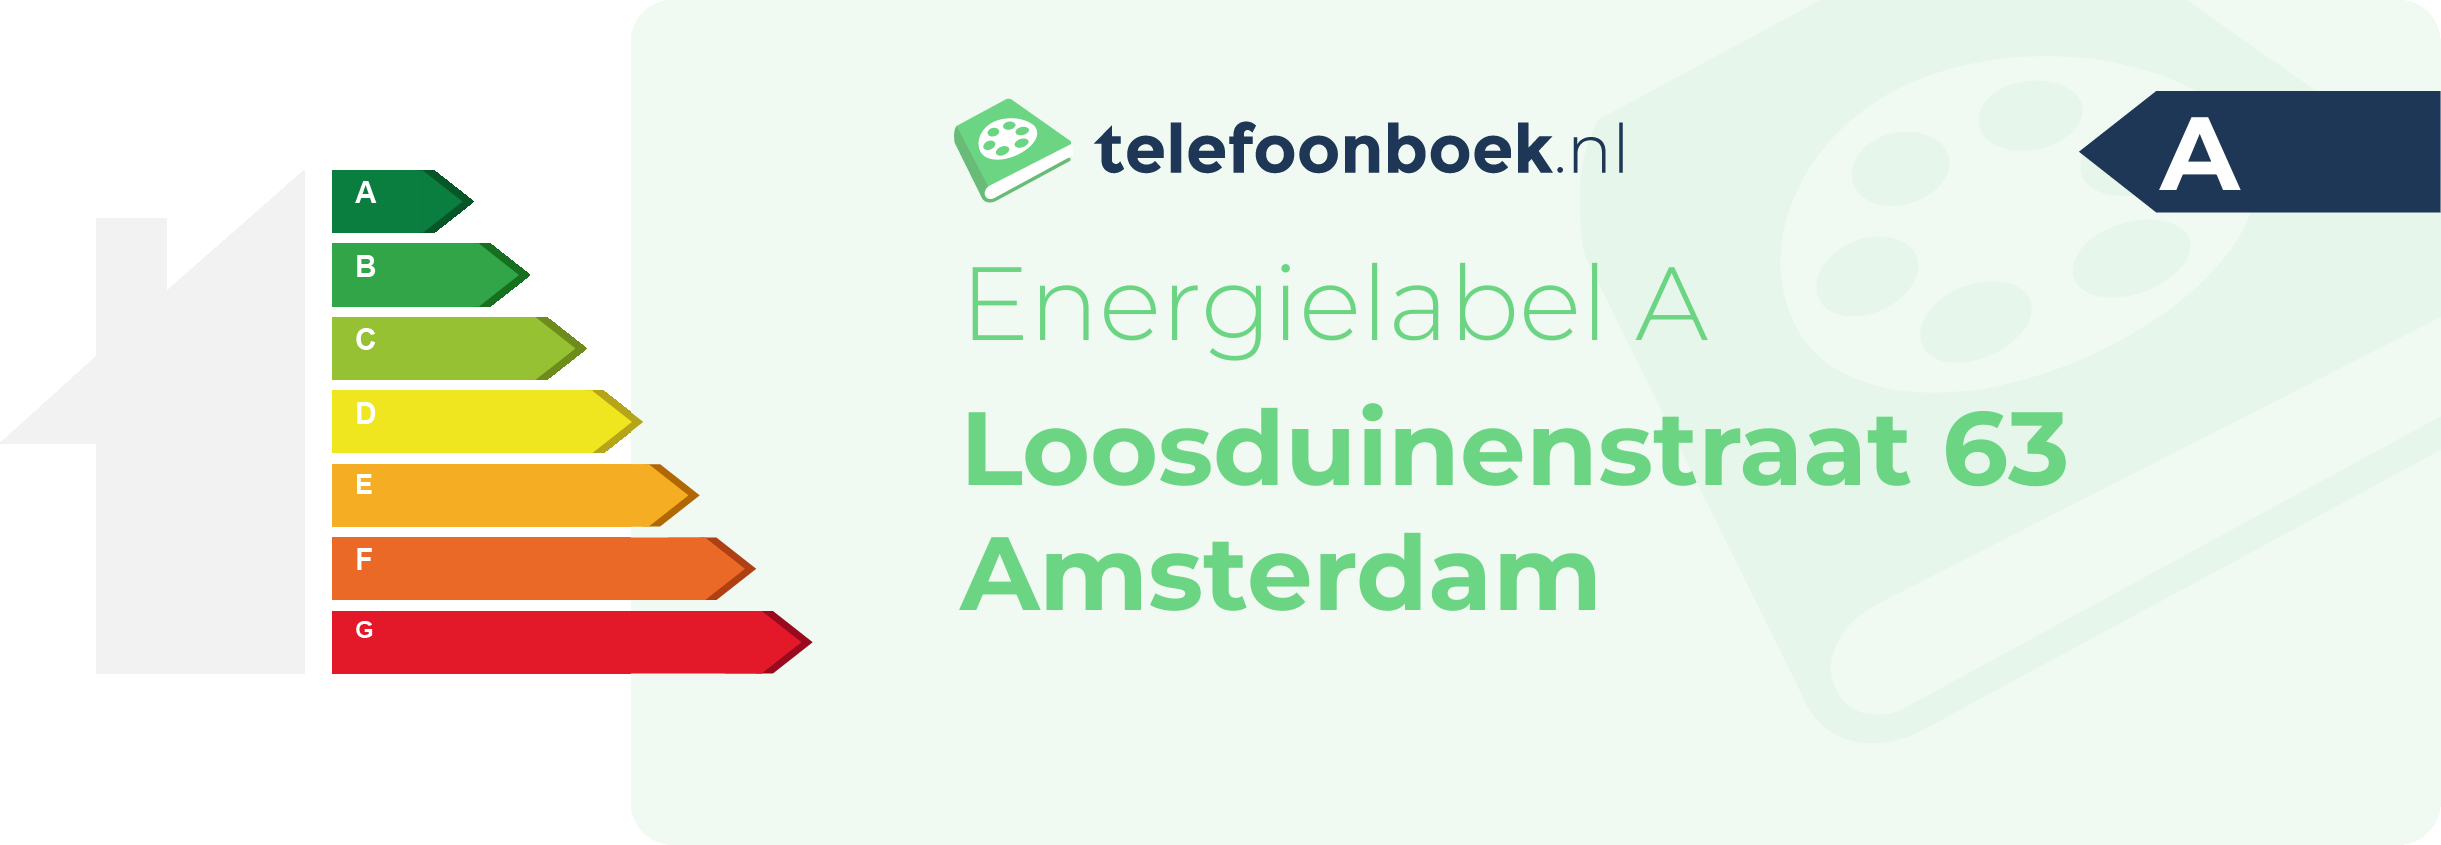 Energielabel Loosduinenstraat 63 Amsterdam